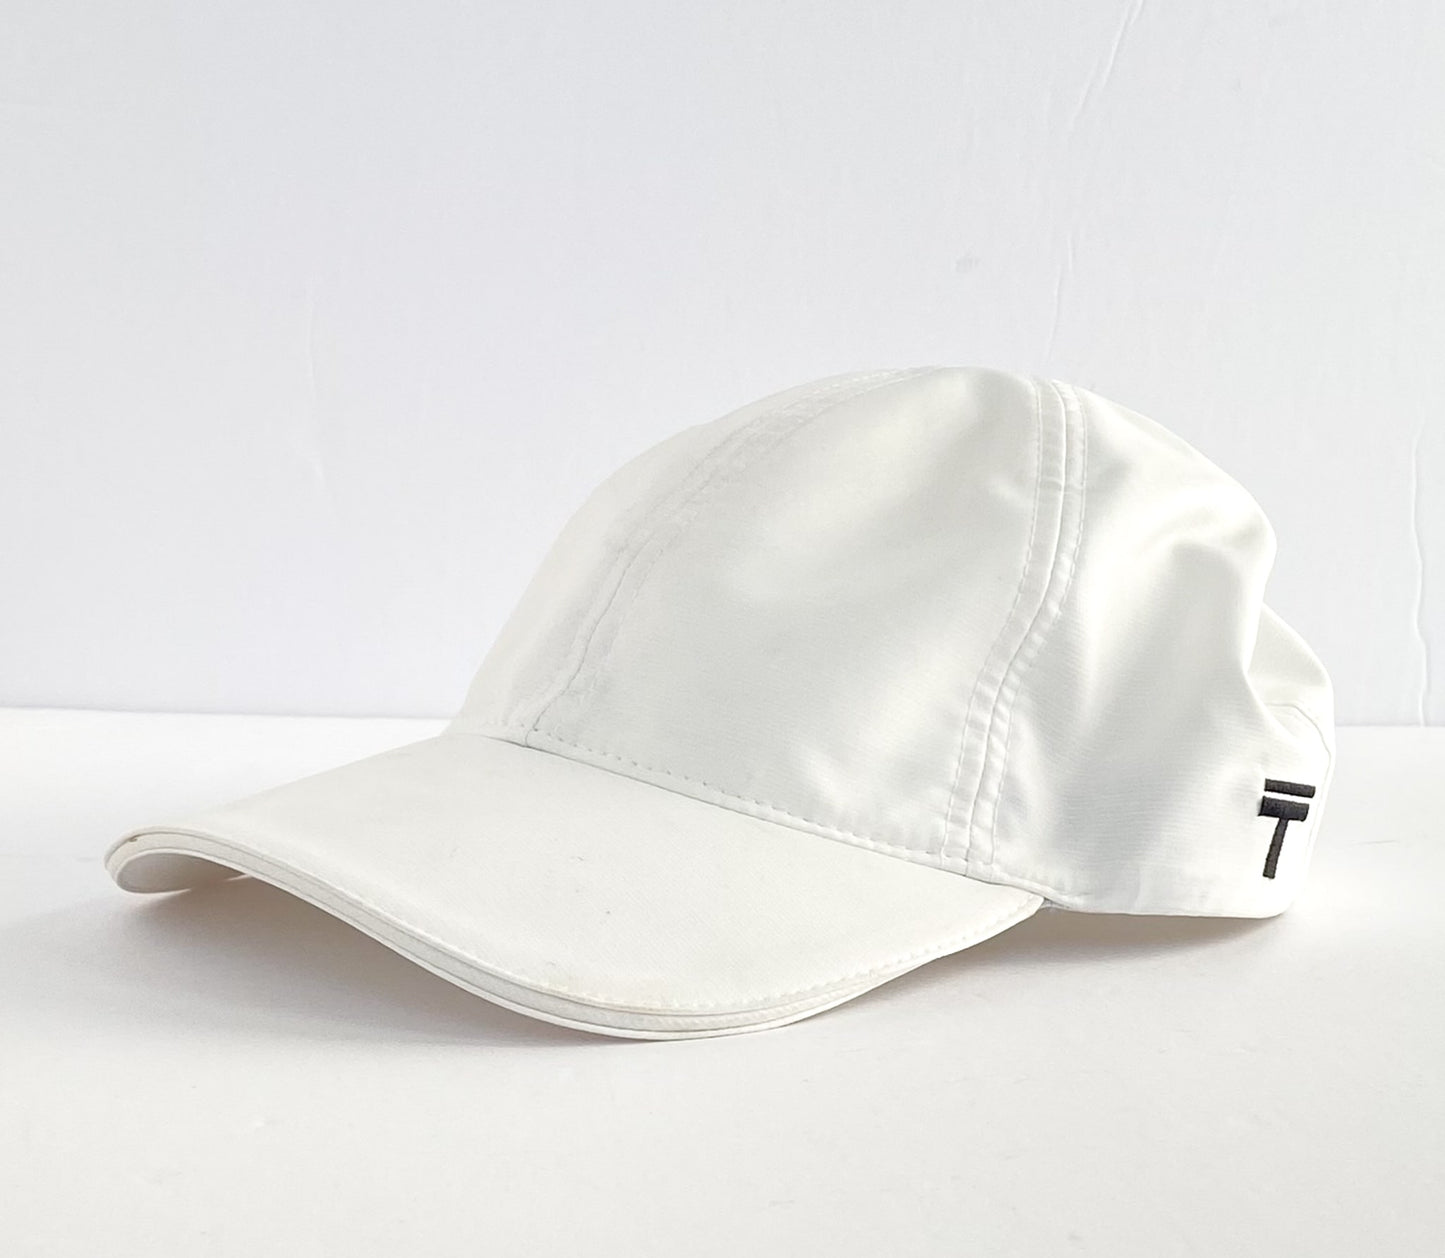 Top Knot Hat - White - Medium/Large